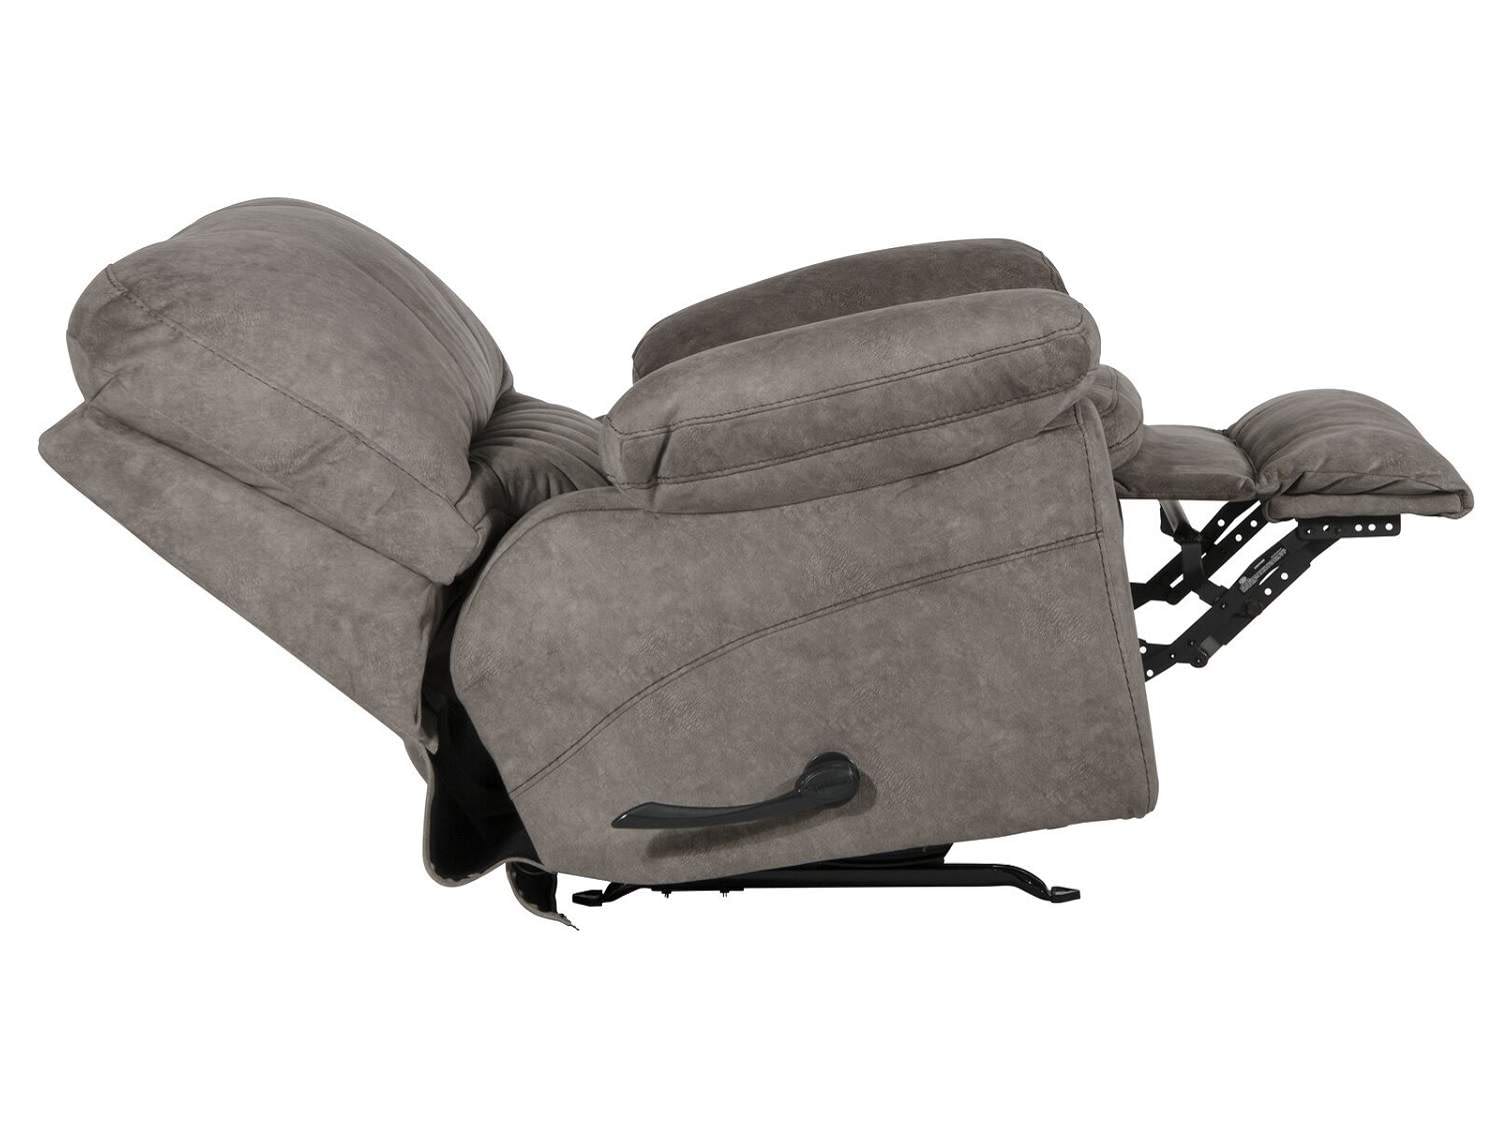 ZOLA Recliner Chair - Open Side